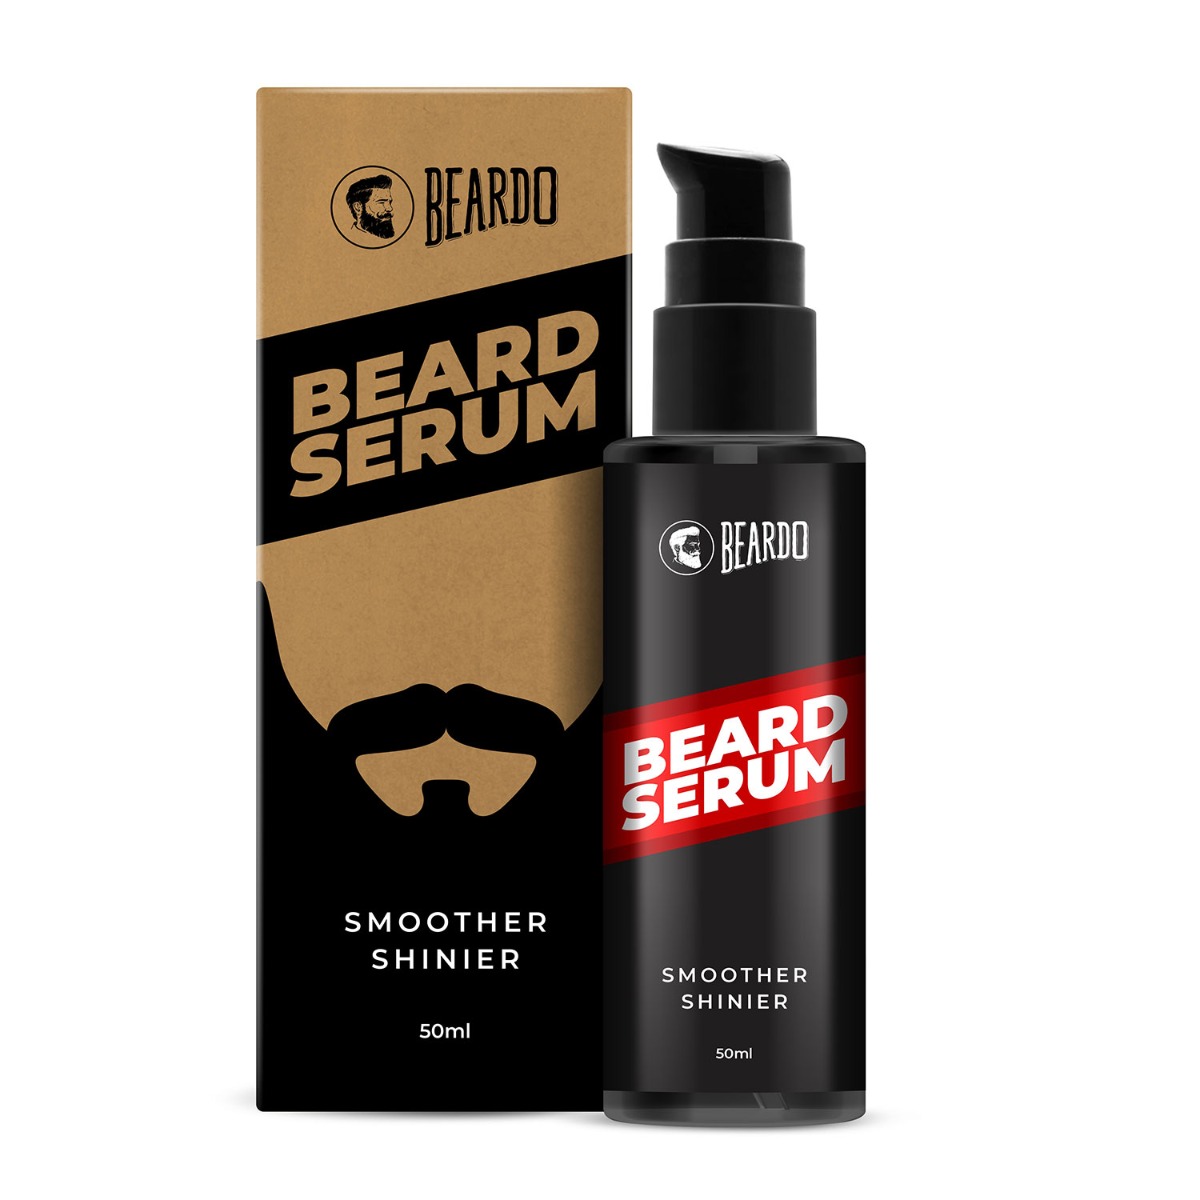 Beardo Beard Serum, 50ml